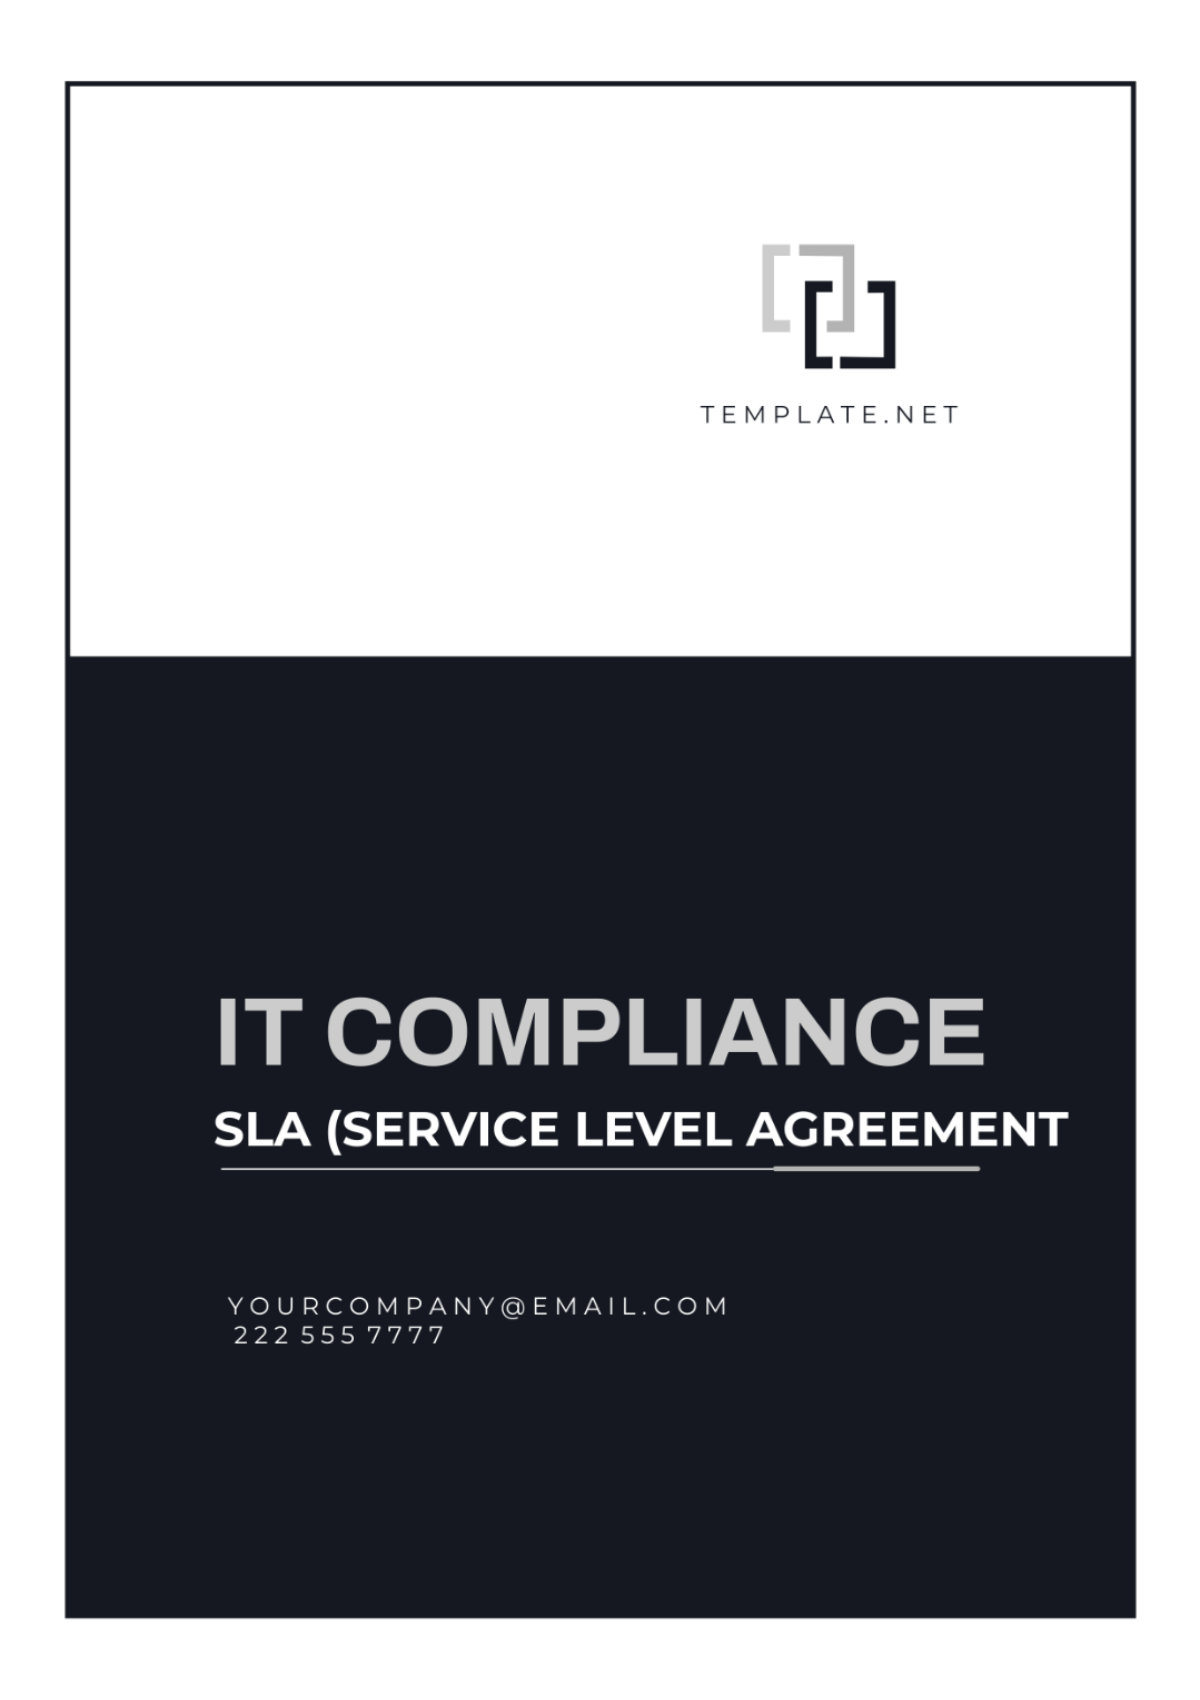 Free IT Compliance Sla (Service Level Agreement) Template